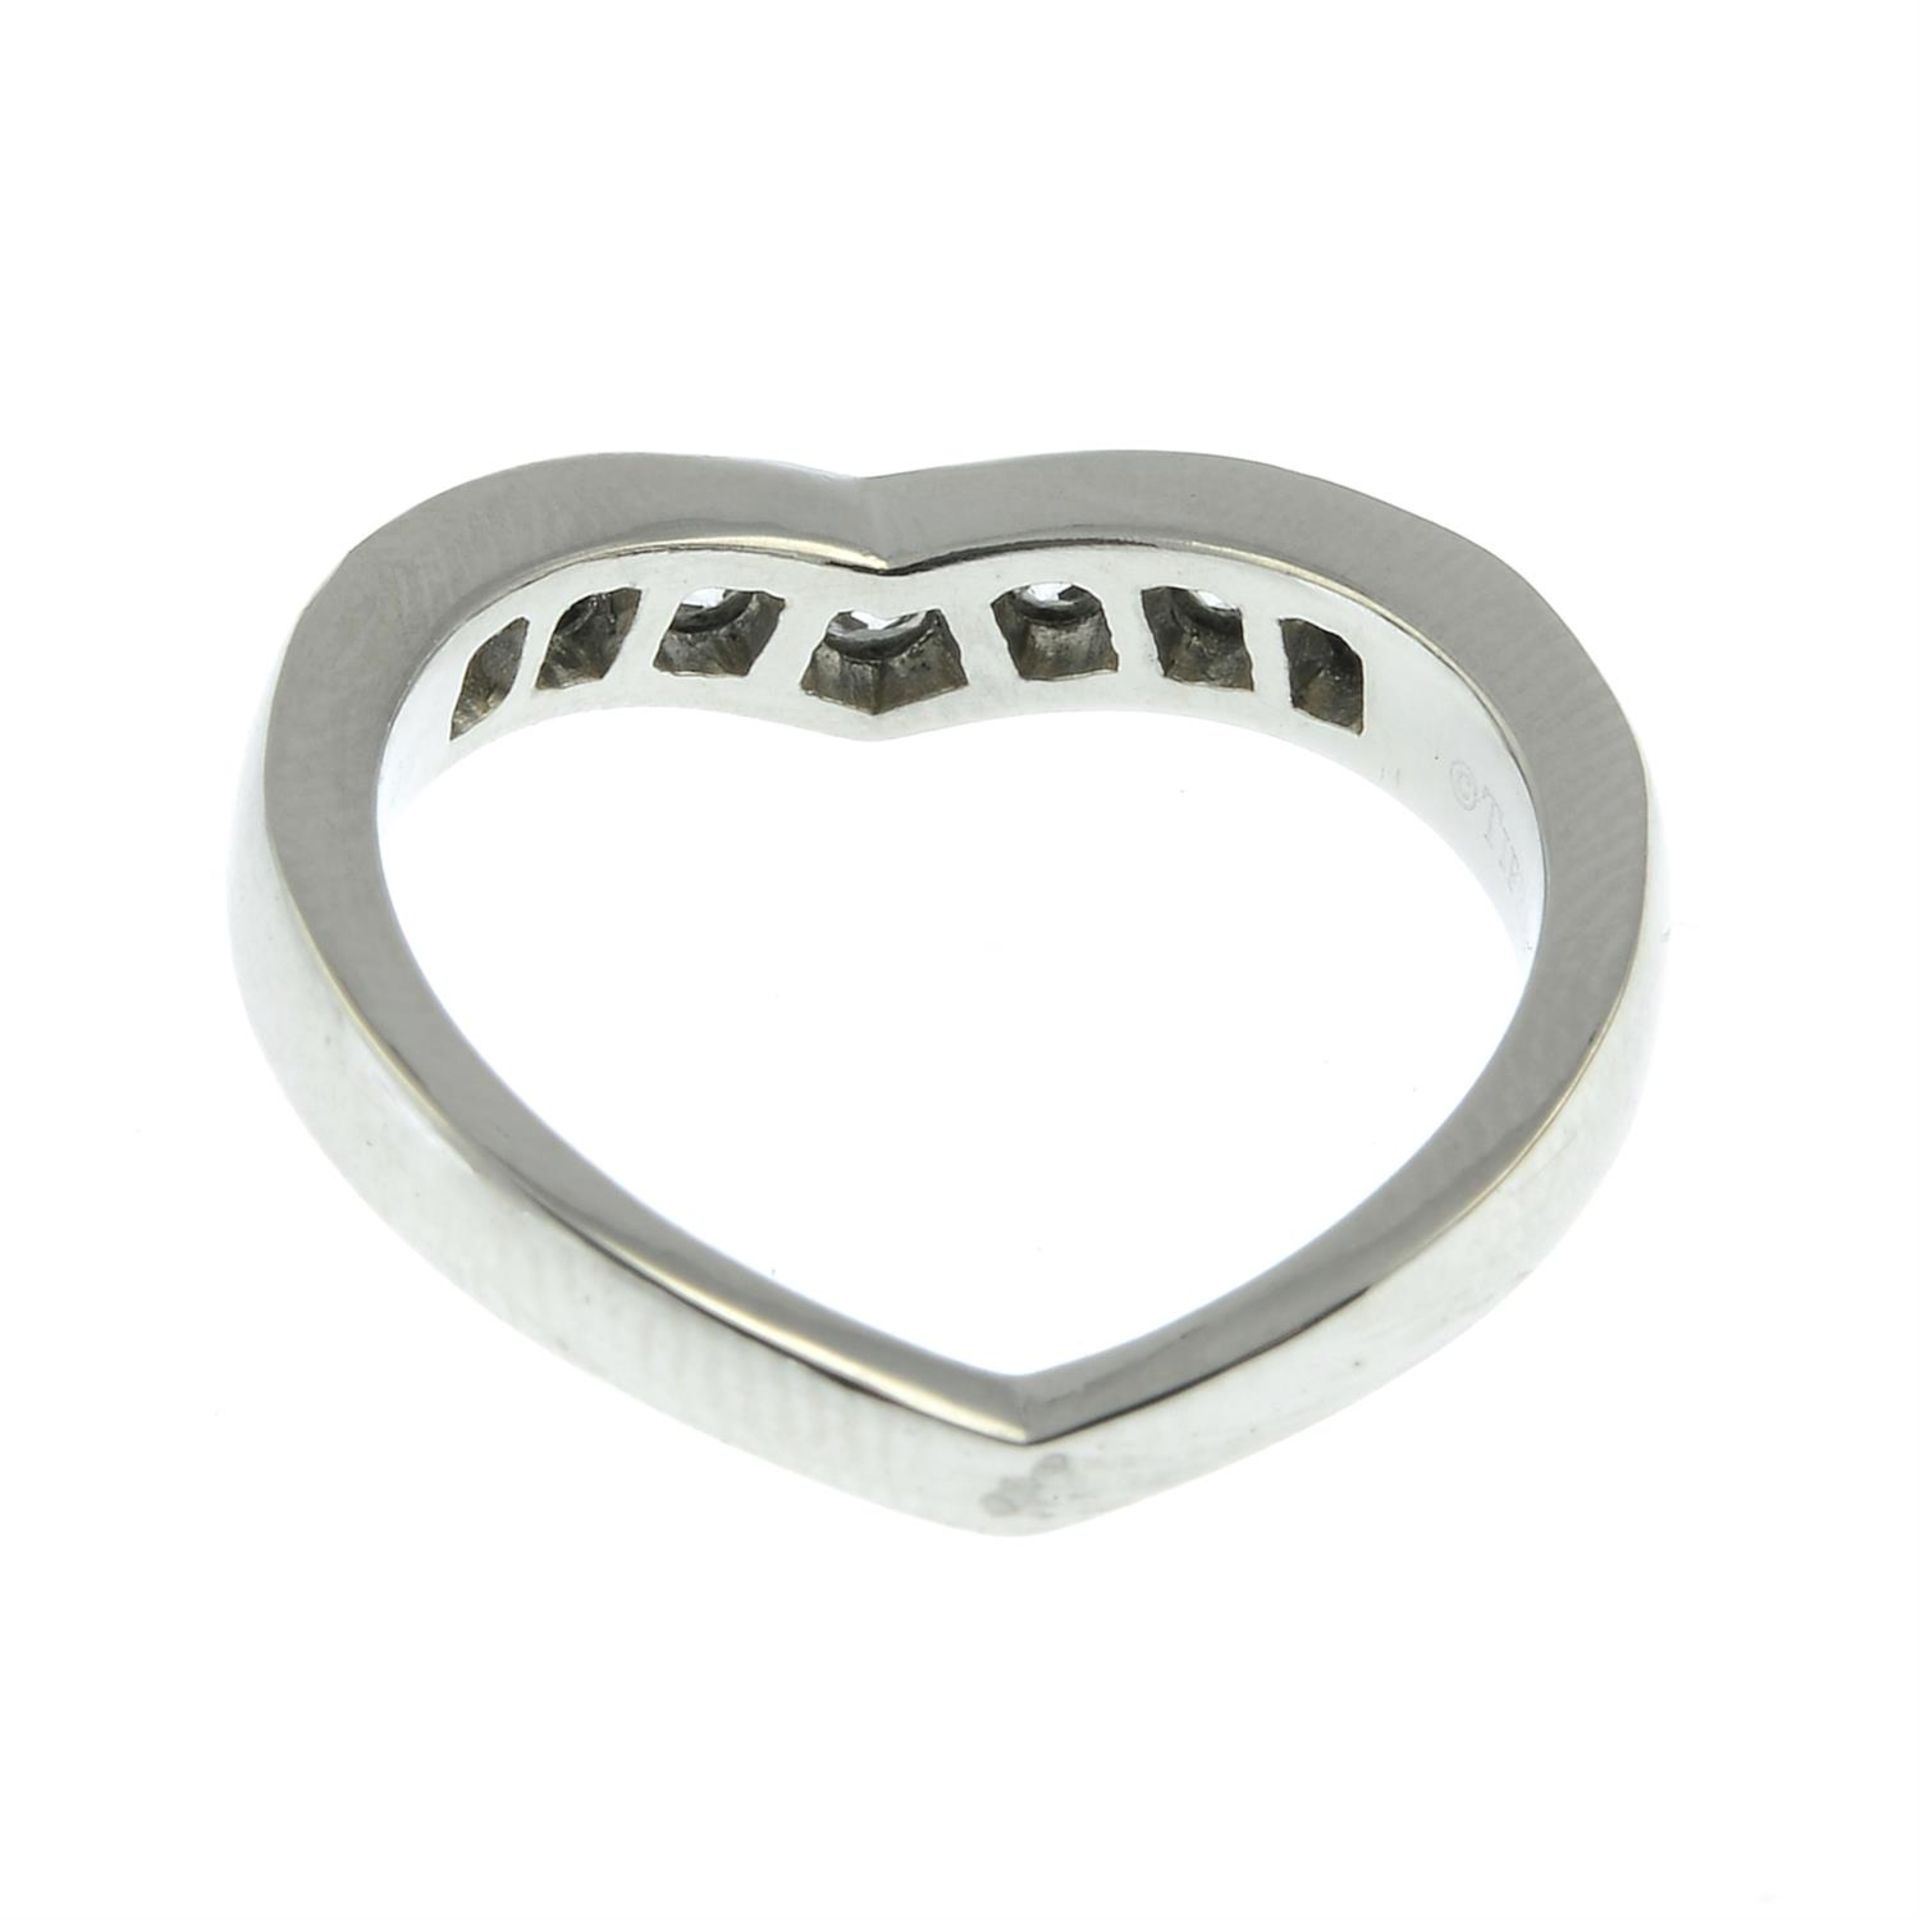 A brilliant-cut diamond chevron ring, by Tiffany & Co. - Image 2 of 4